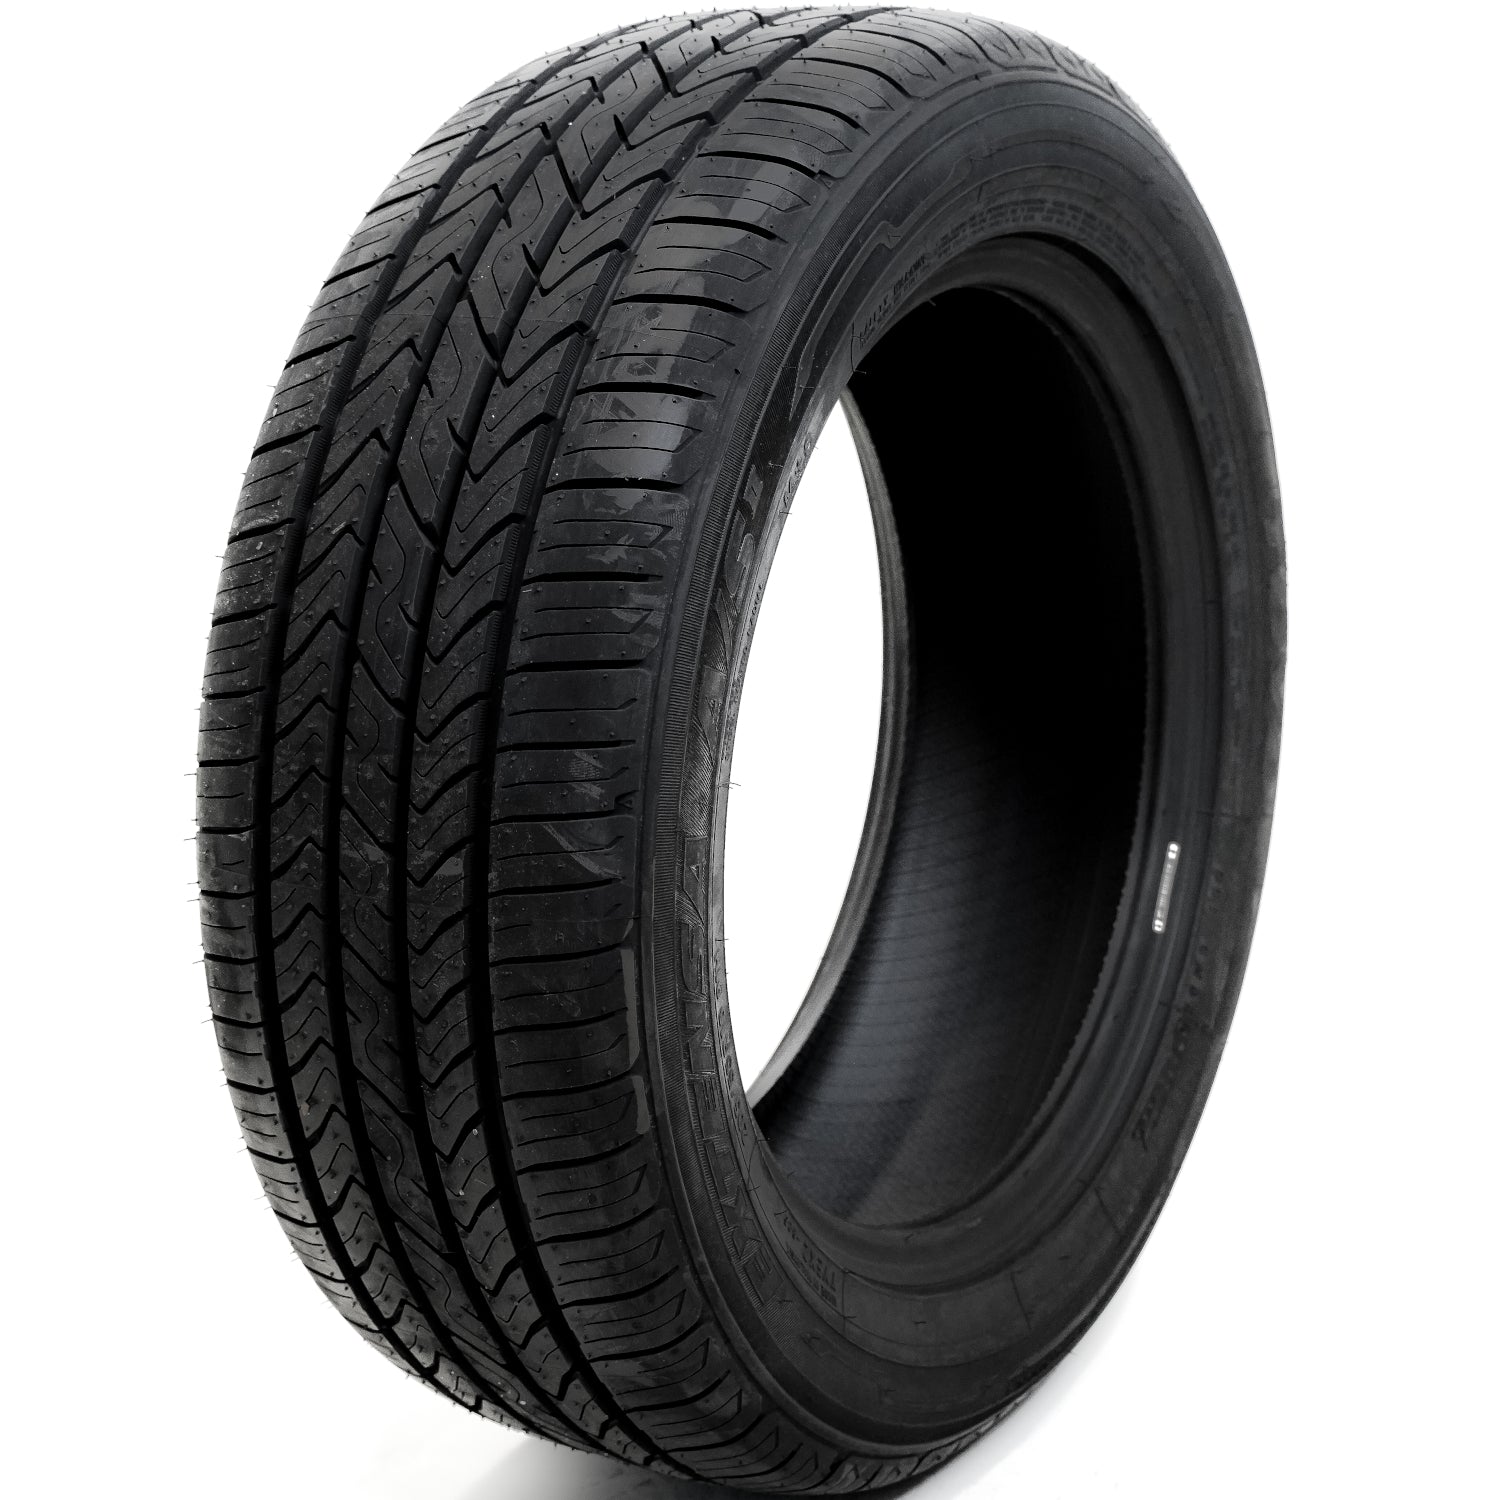 Shop 215/60R17 Tires